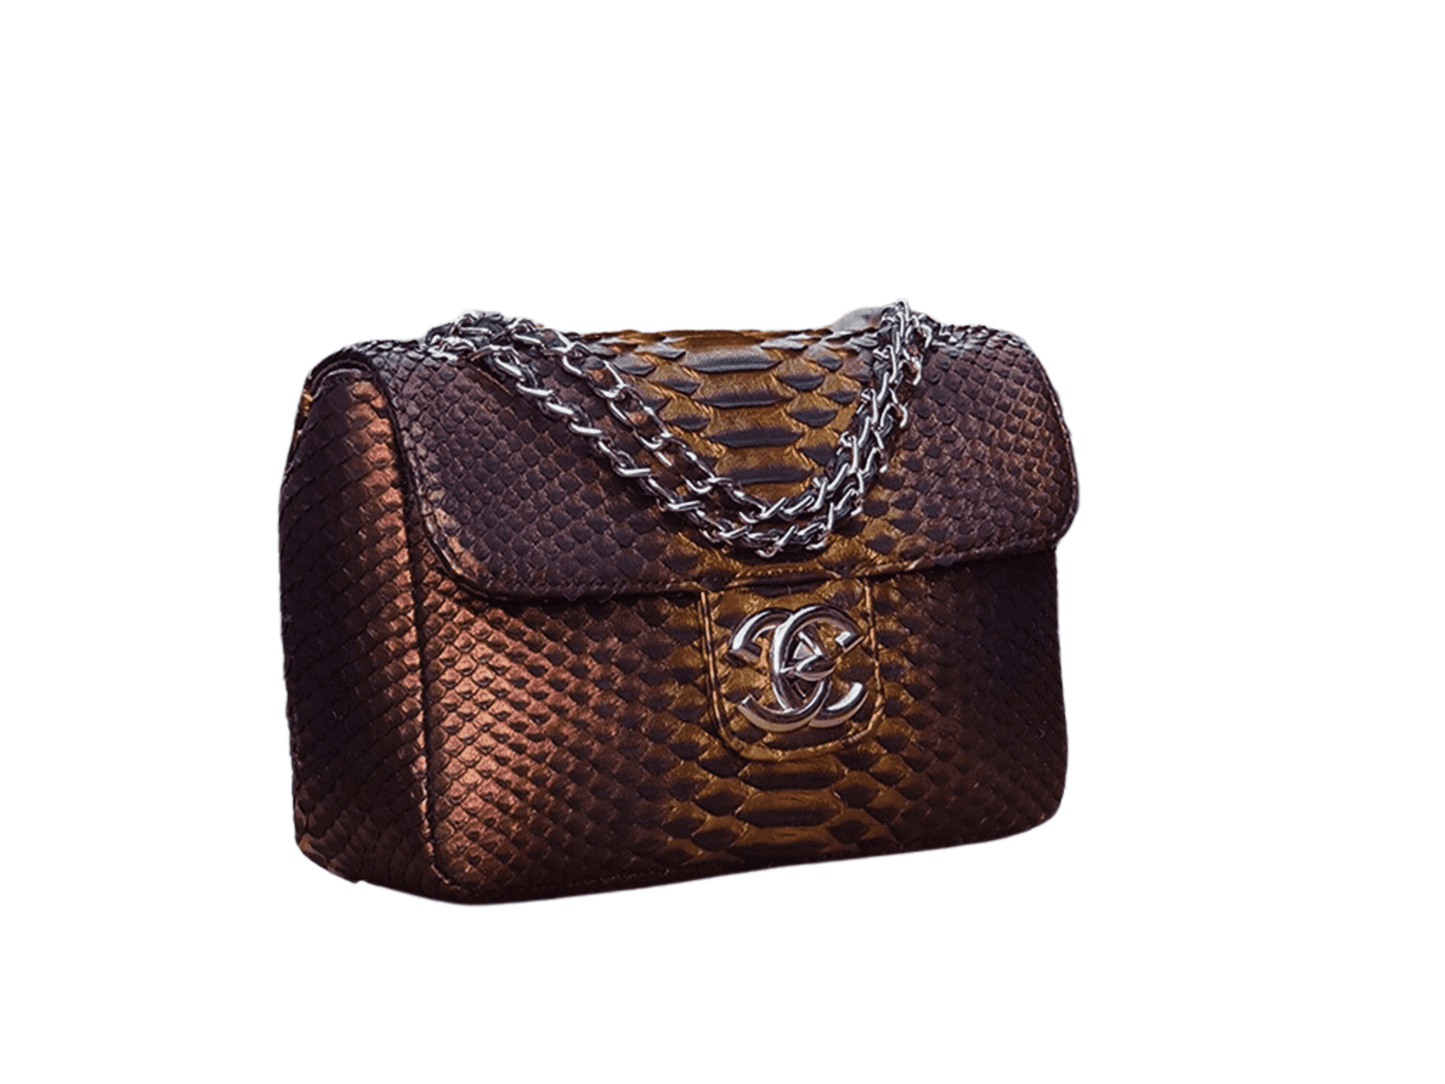 Chanel Small Flap Snakeskin Shoulder Bag Brown Python Jacket by LFM Fashion